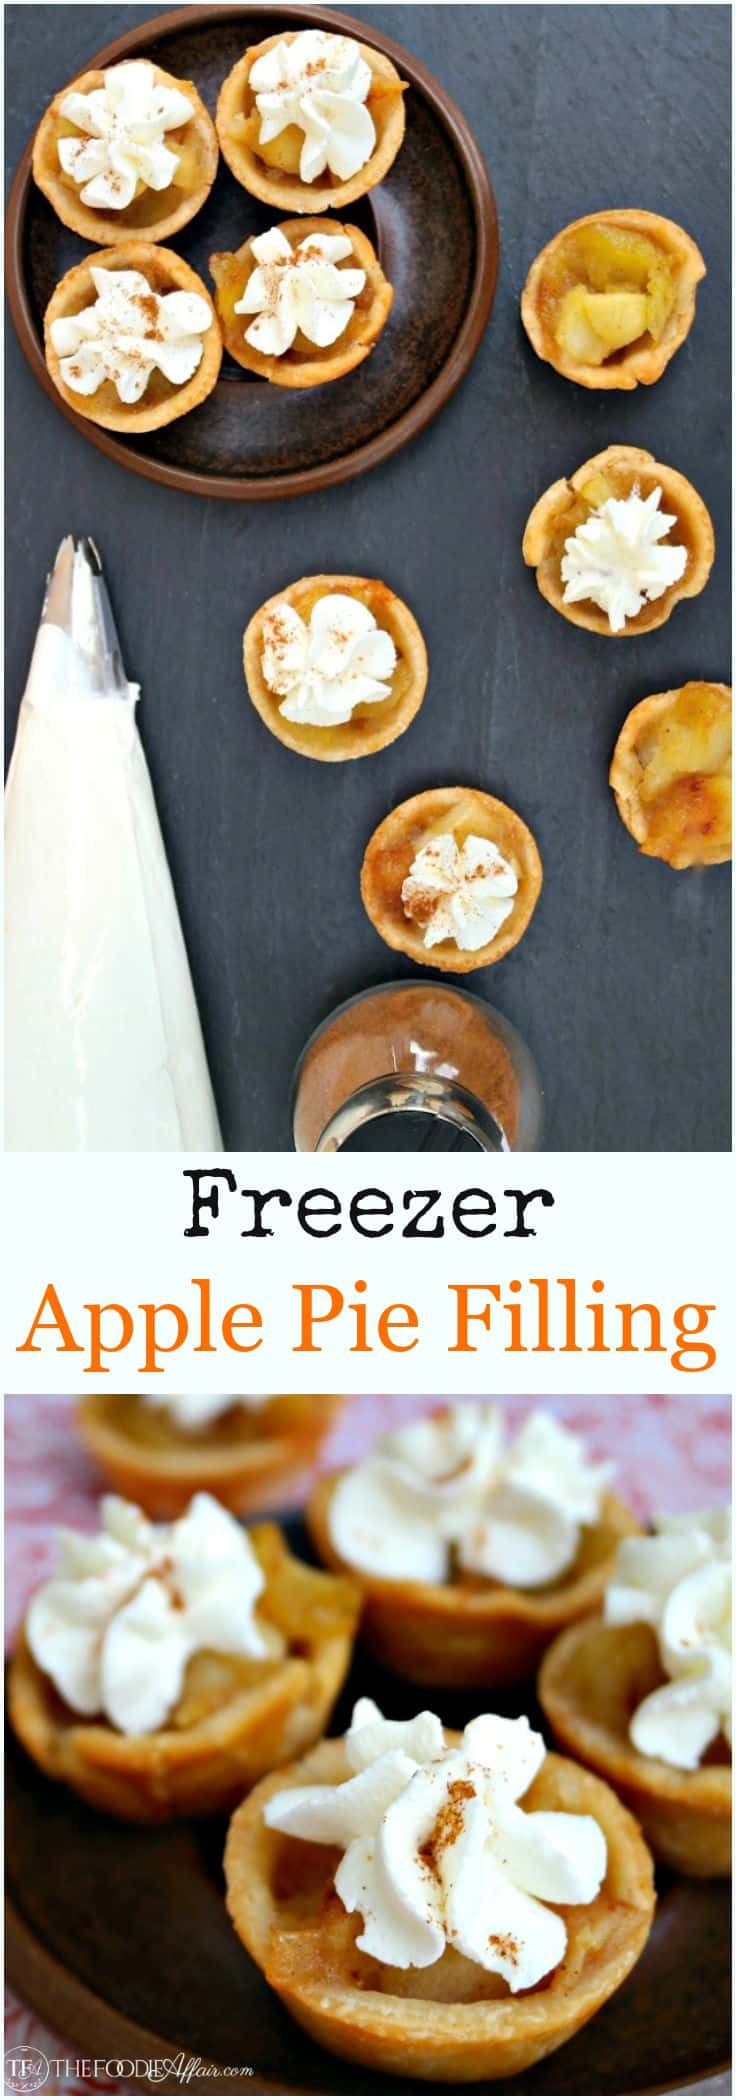 Can You Freeze Apple Pie
 Freezer Apple Pie Filling